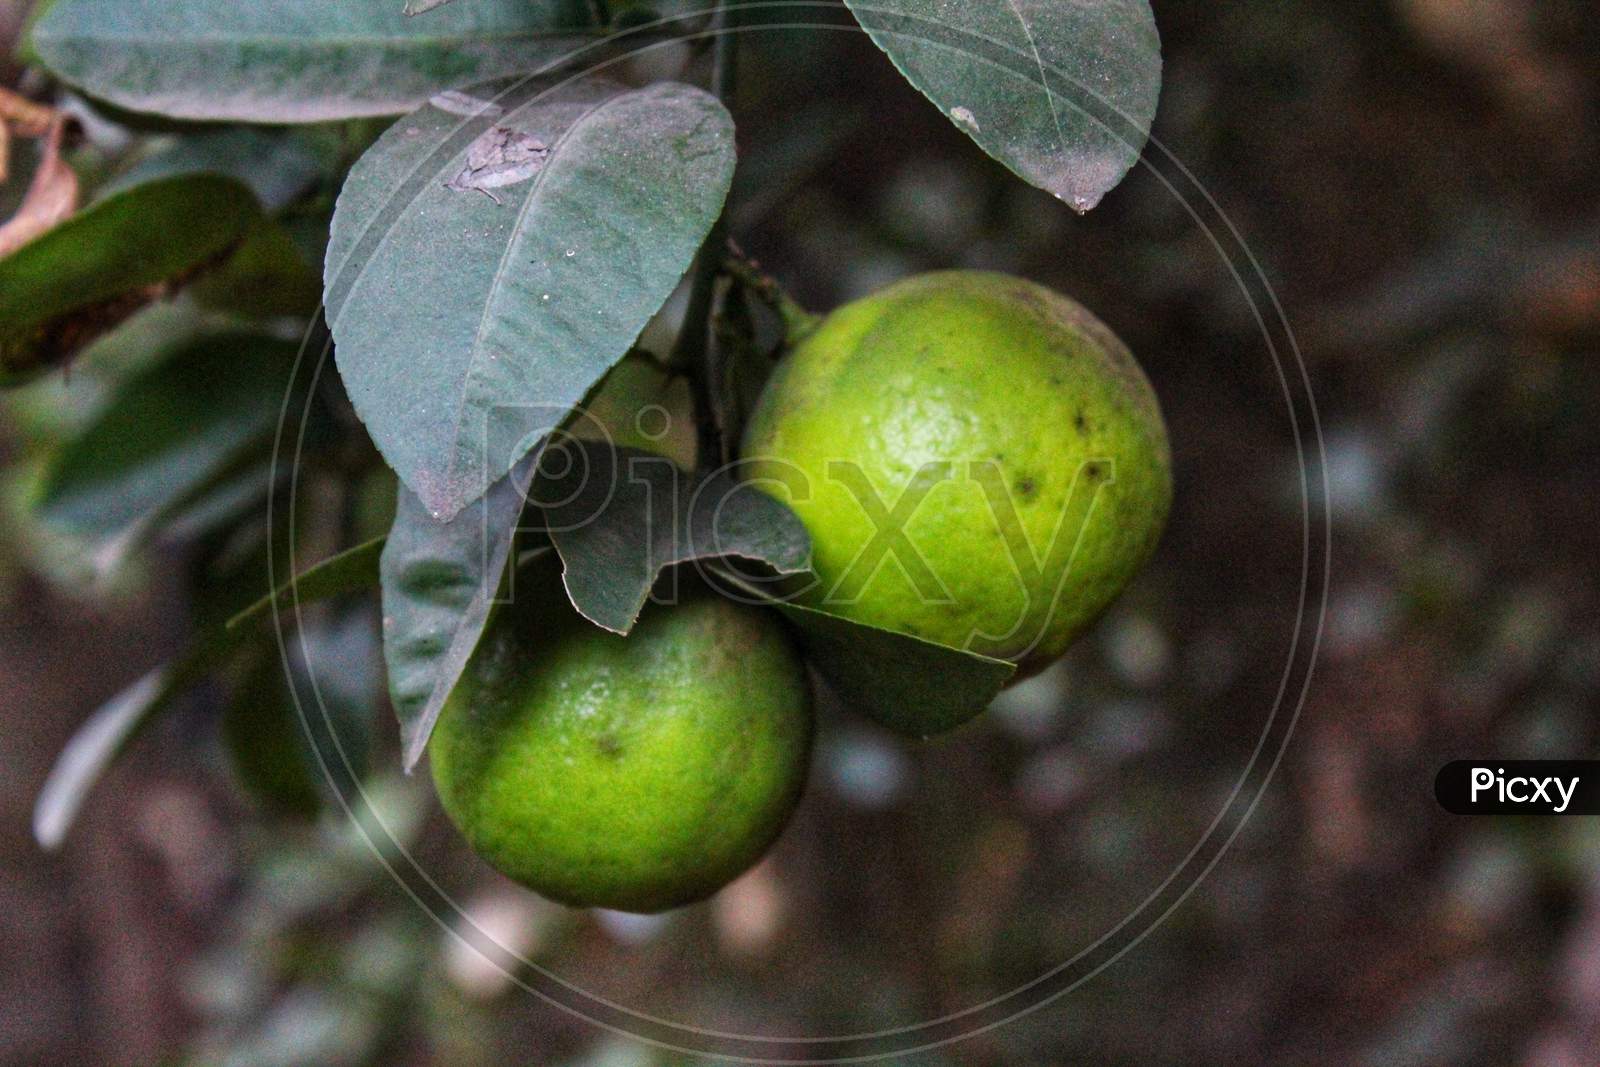 Two beautiful green lemons